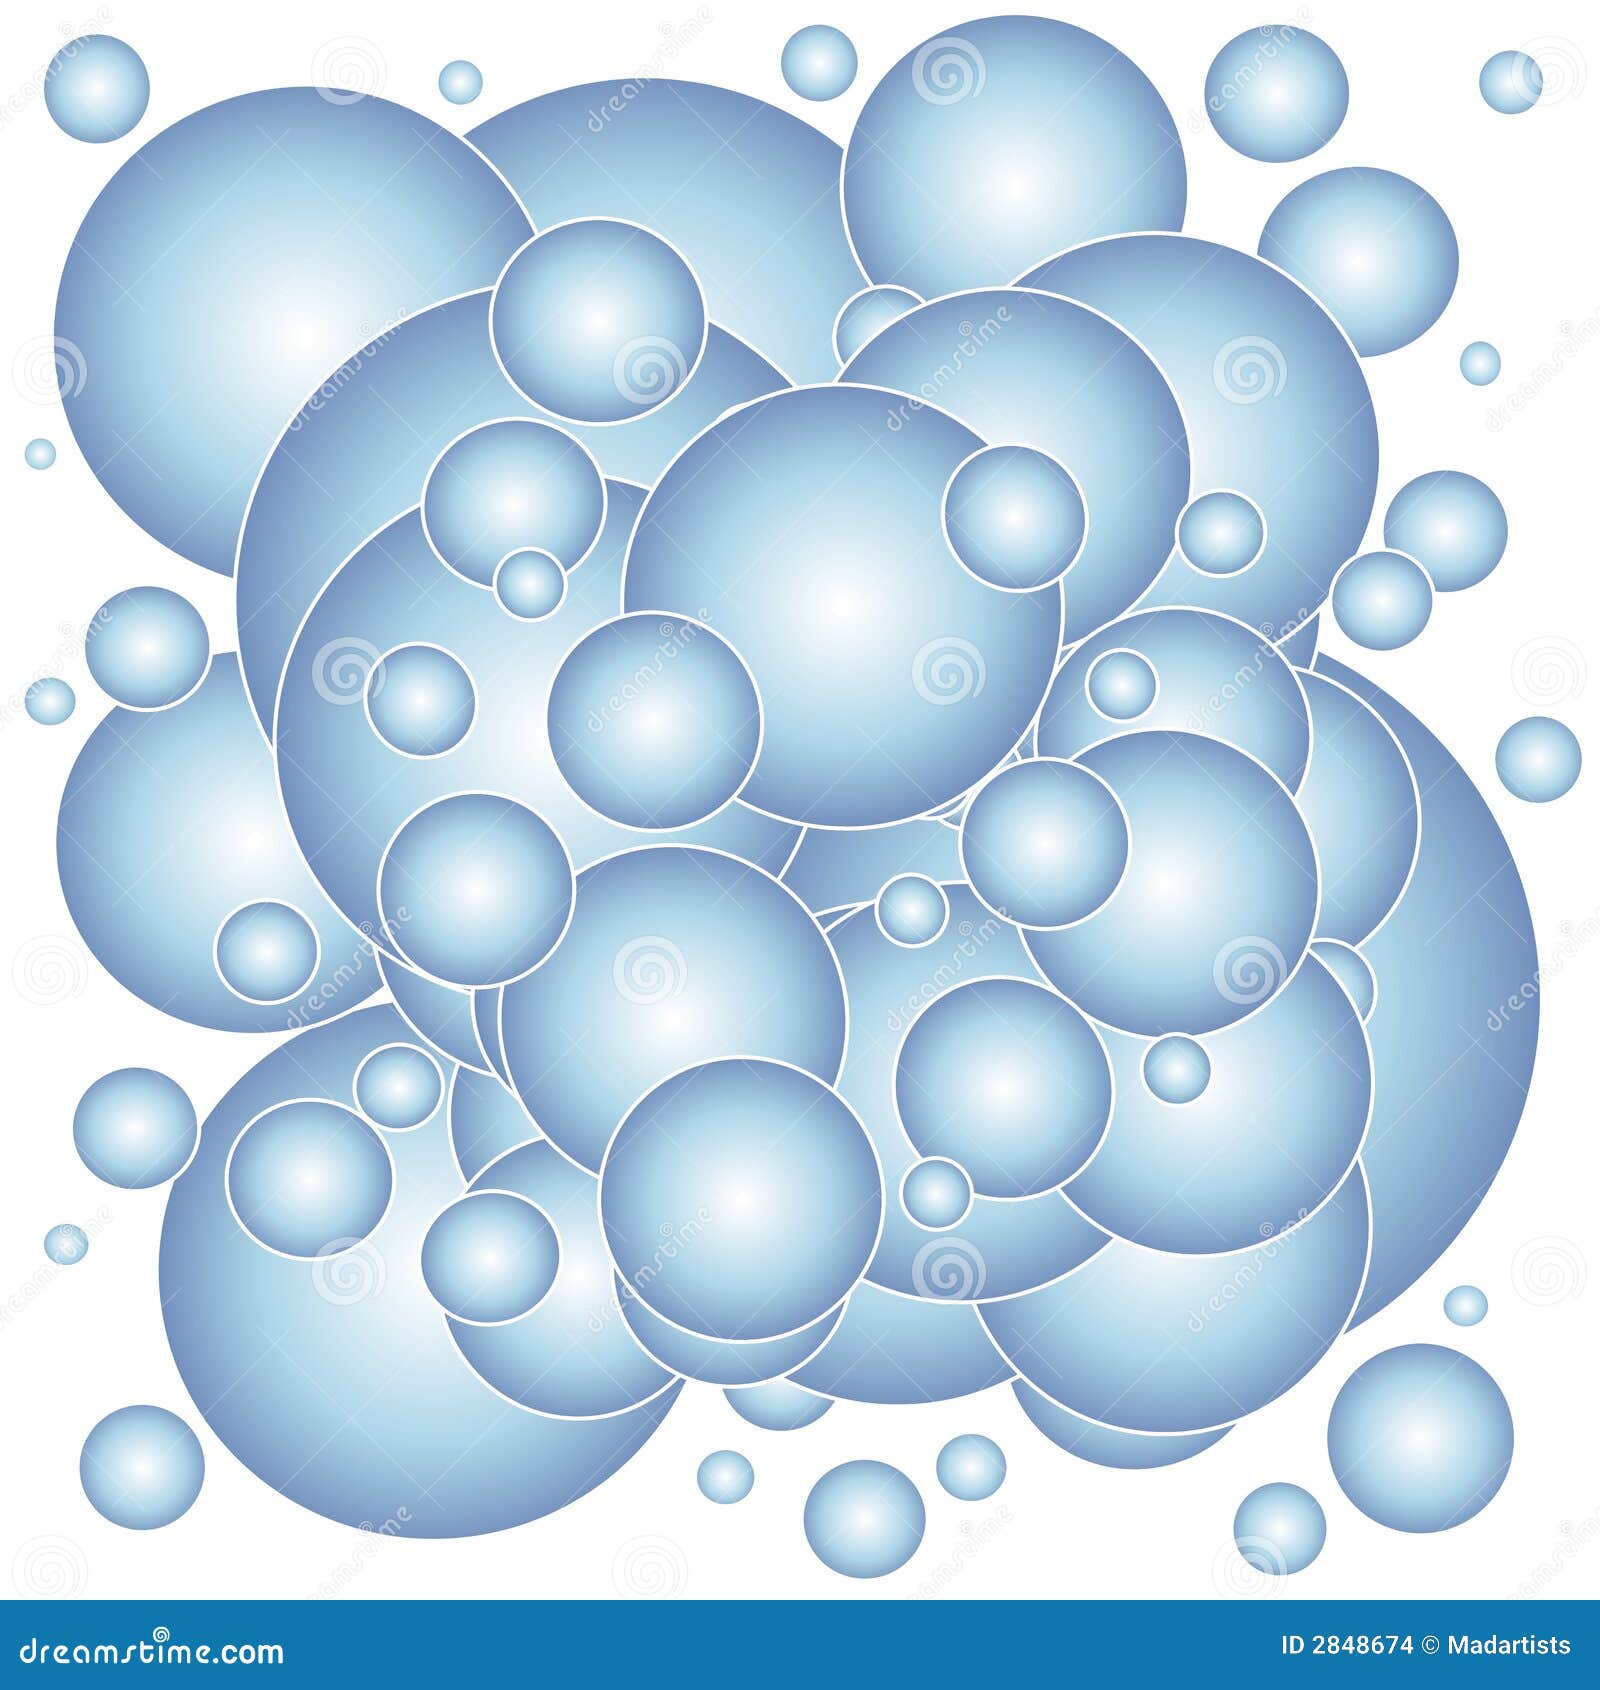 Soap Suds Bubbles Clip Art stock illustration. Illustration of designs